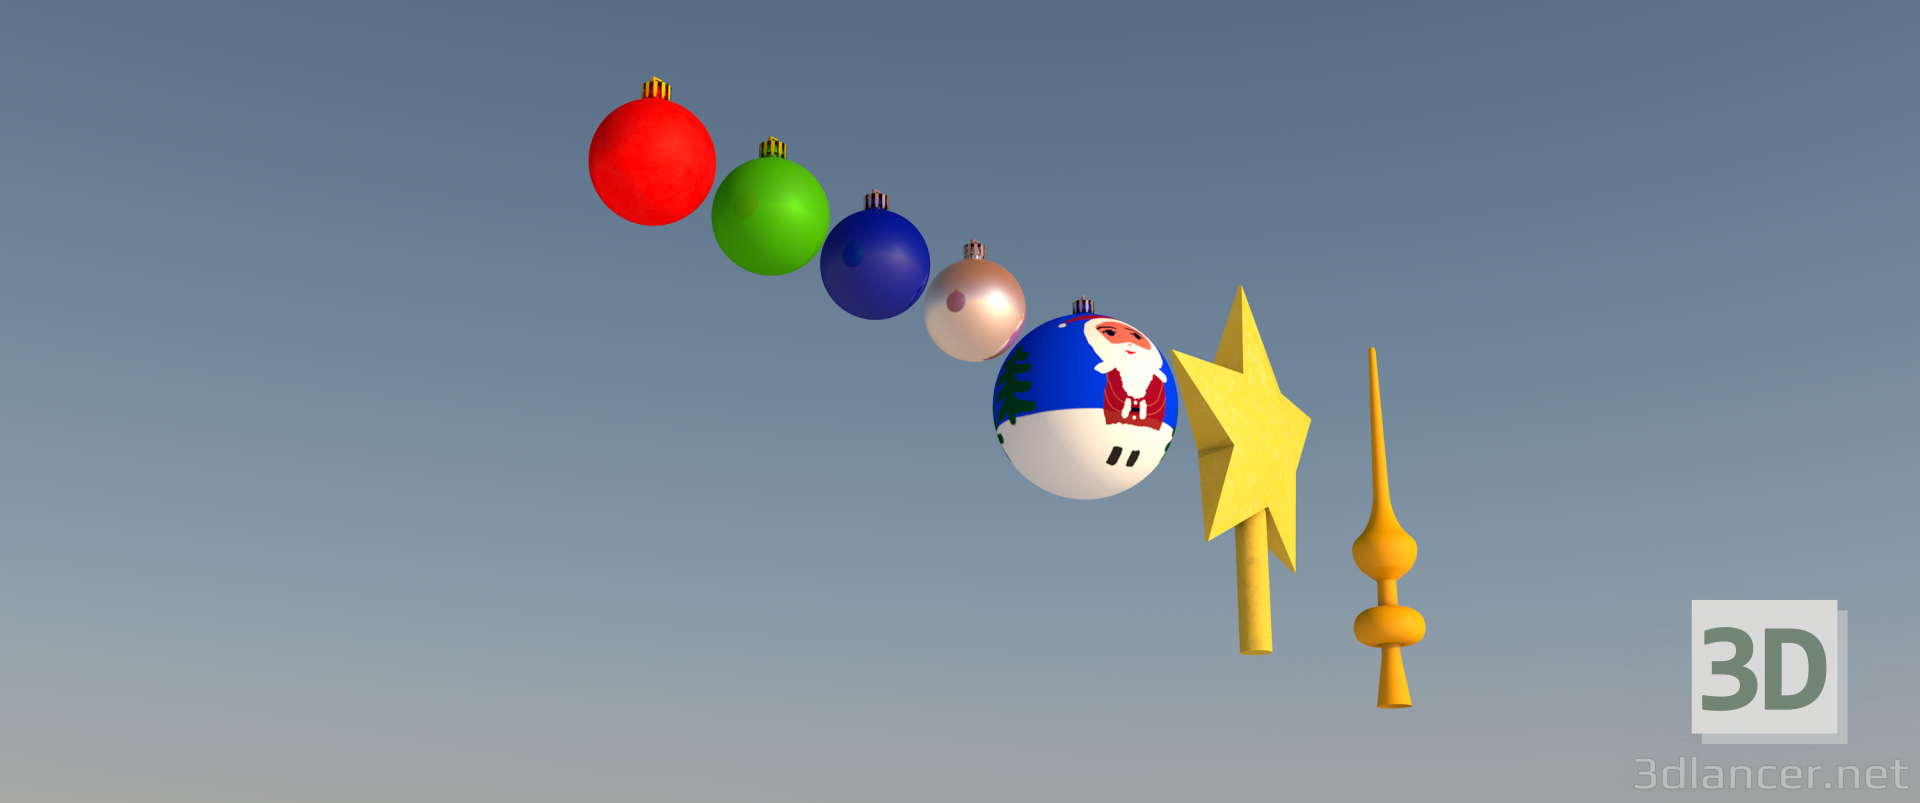 3d set of Christmas toys model buy - render